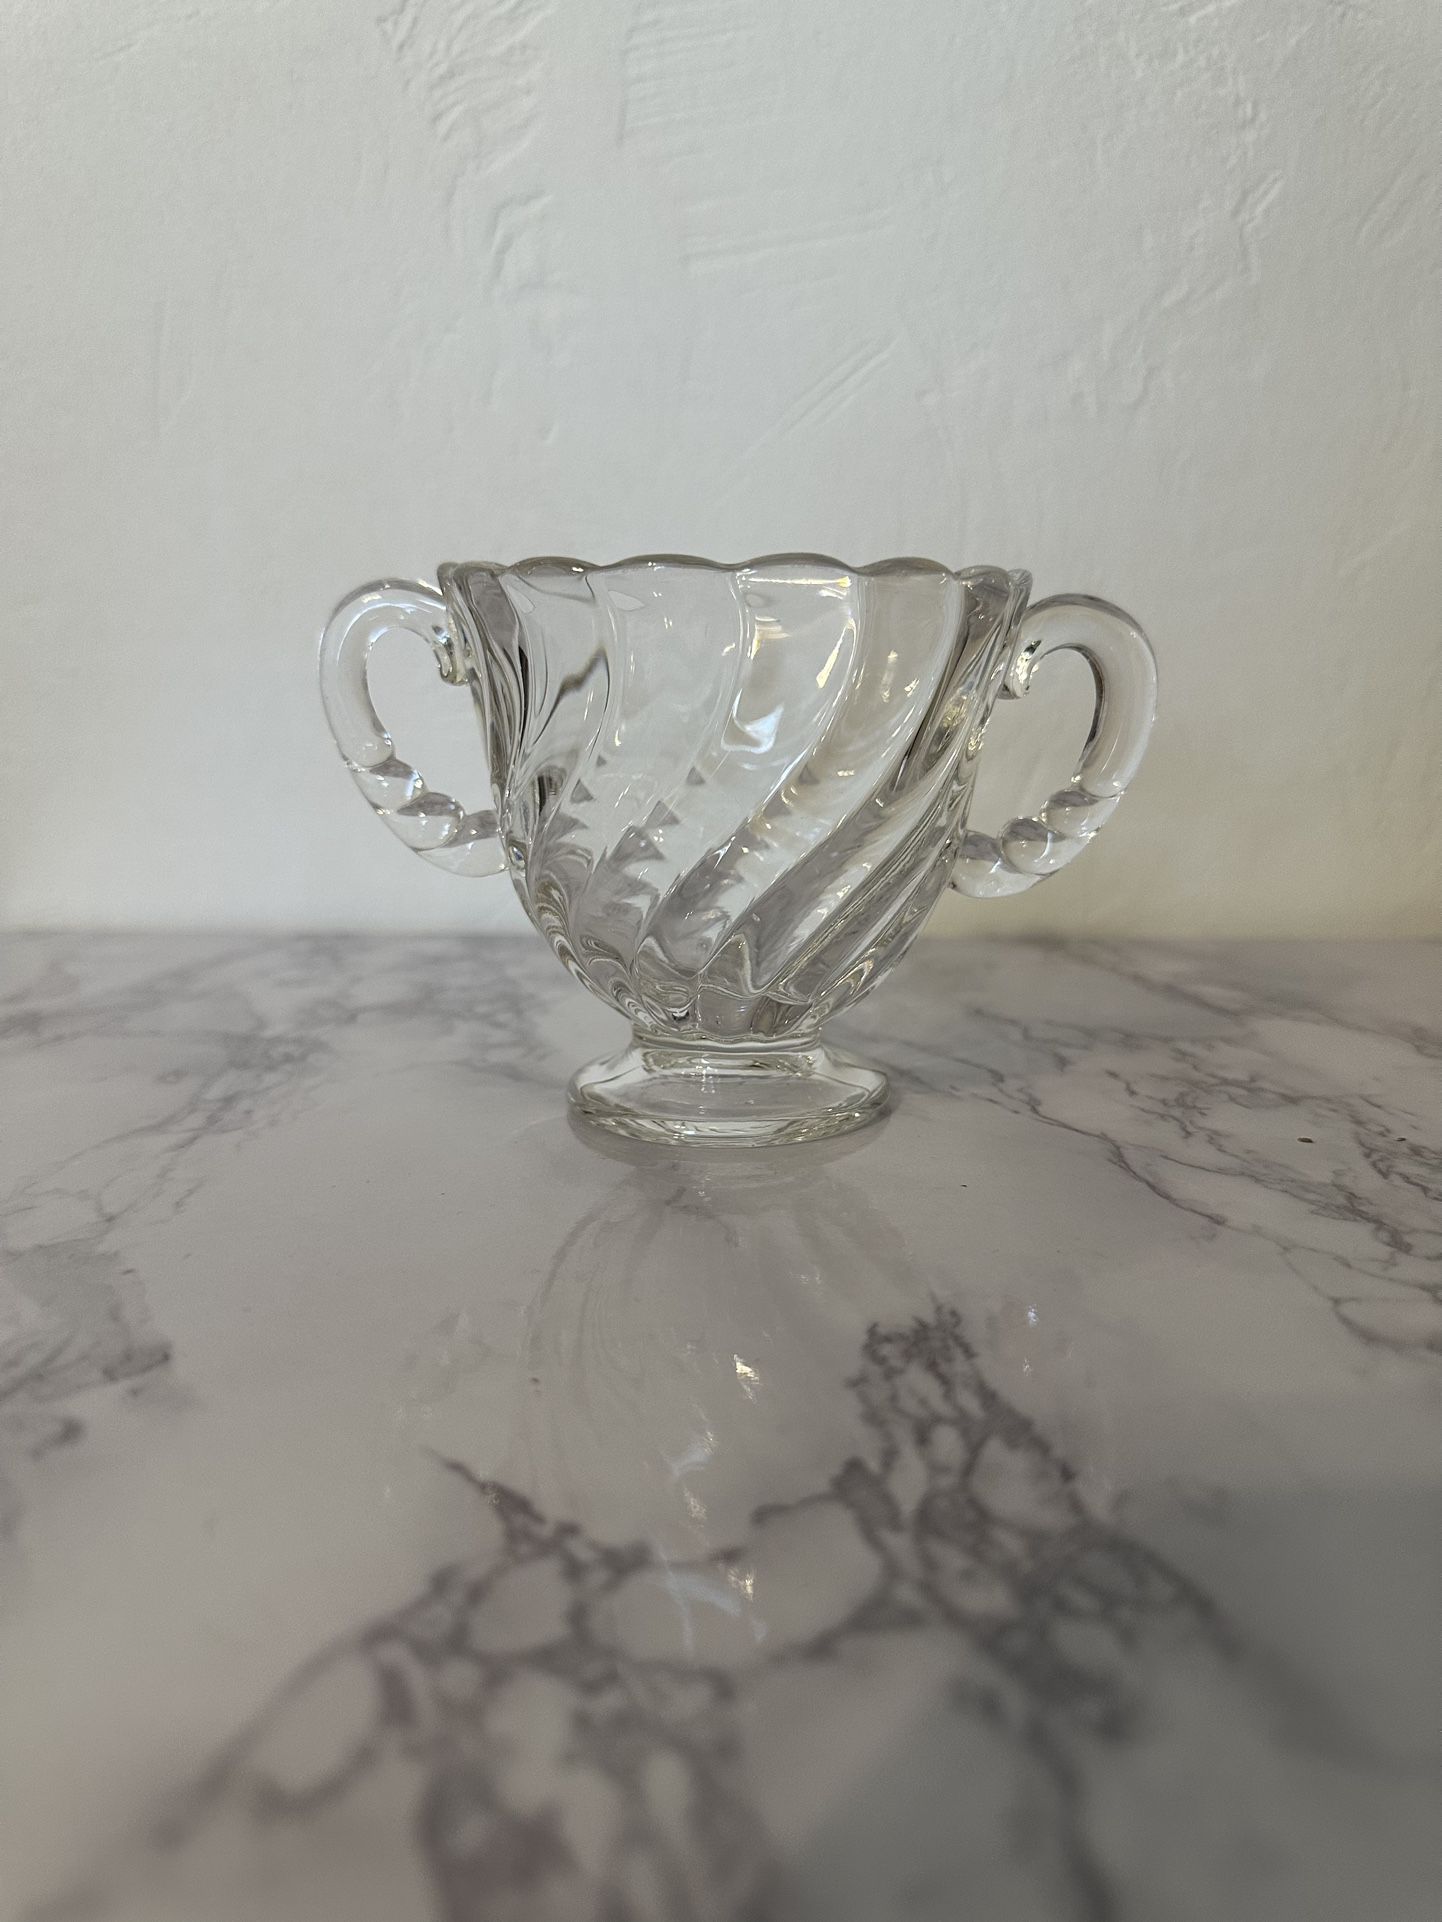 Vintage Fostoria Colony Pattern Clear Glass Sugar Bowl 